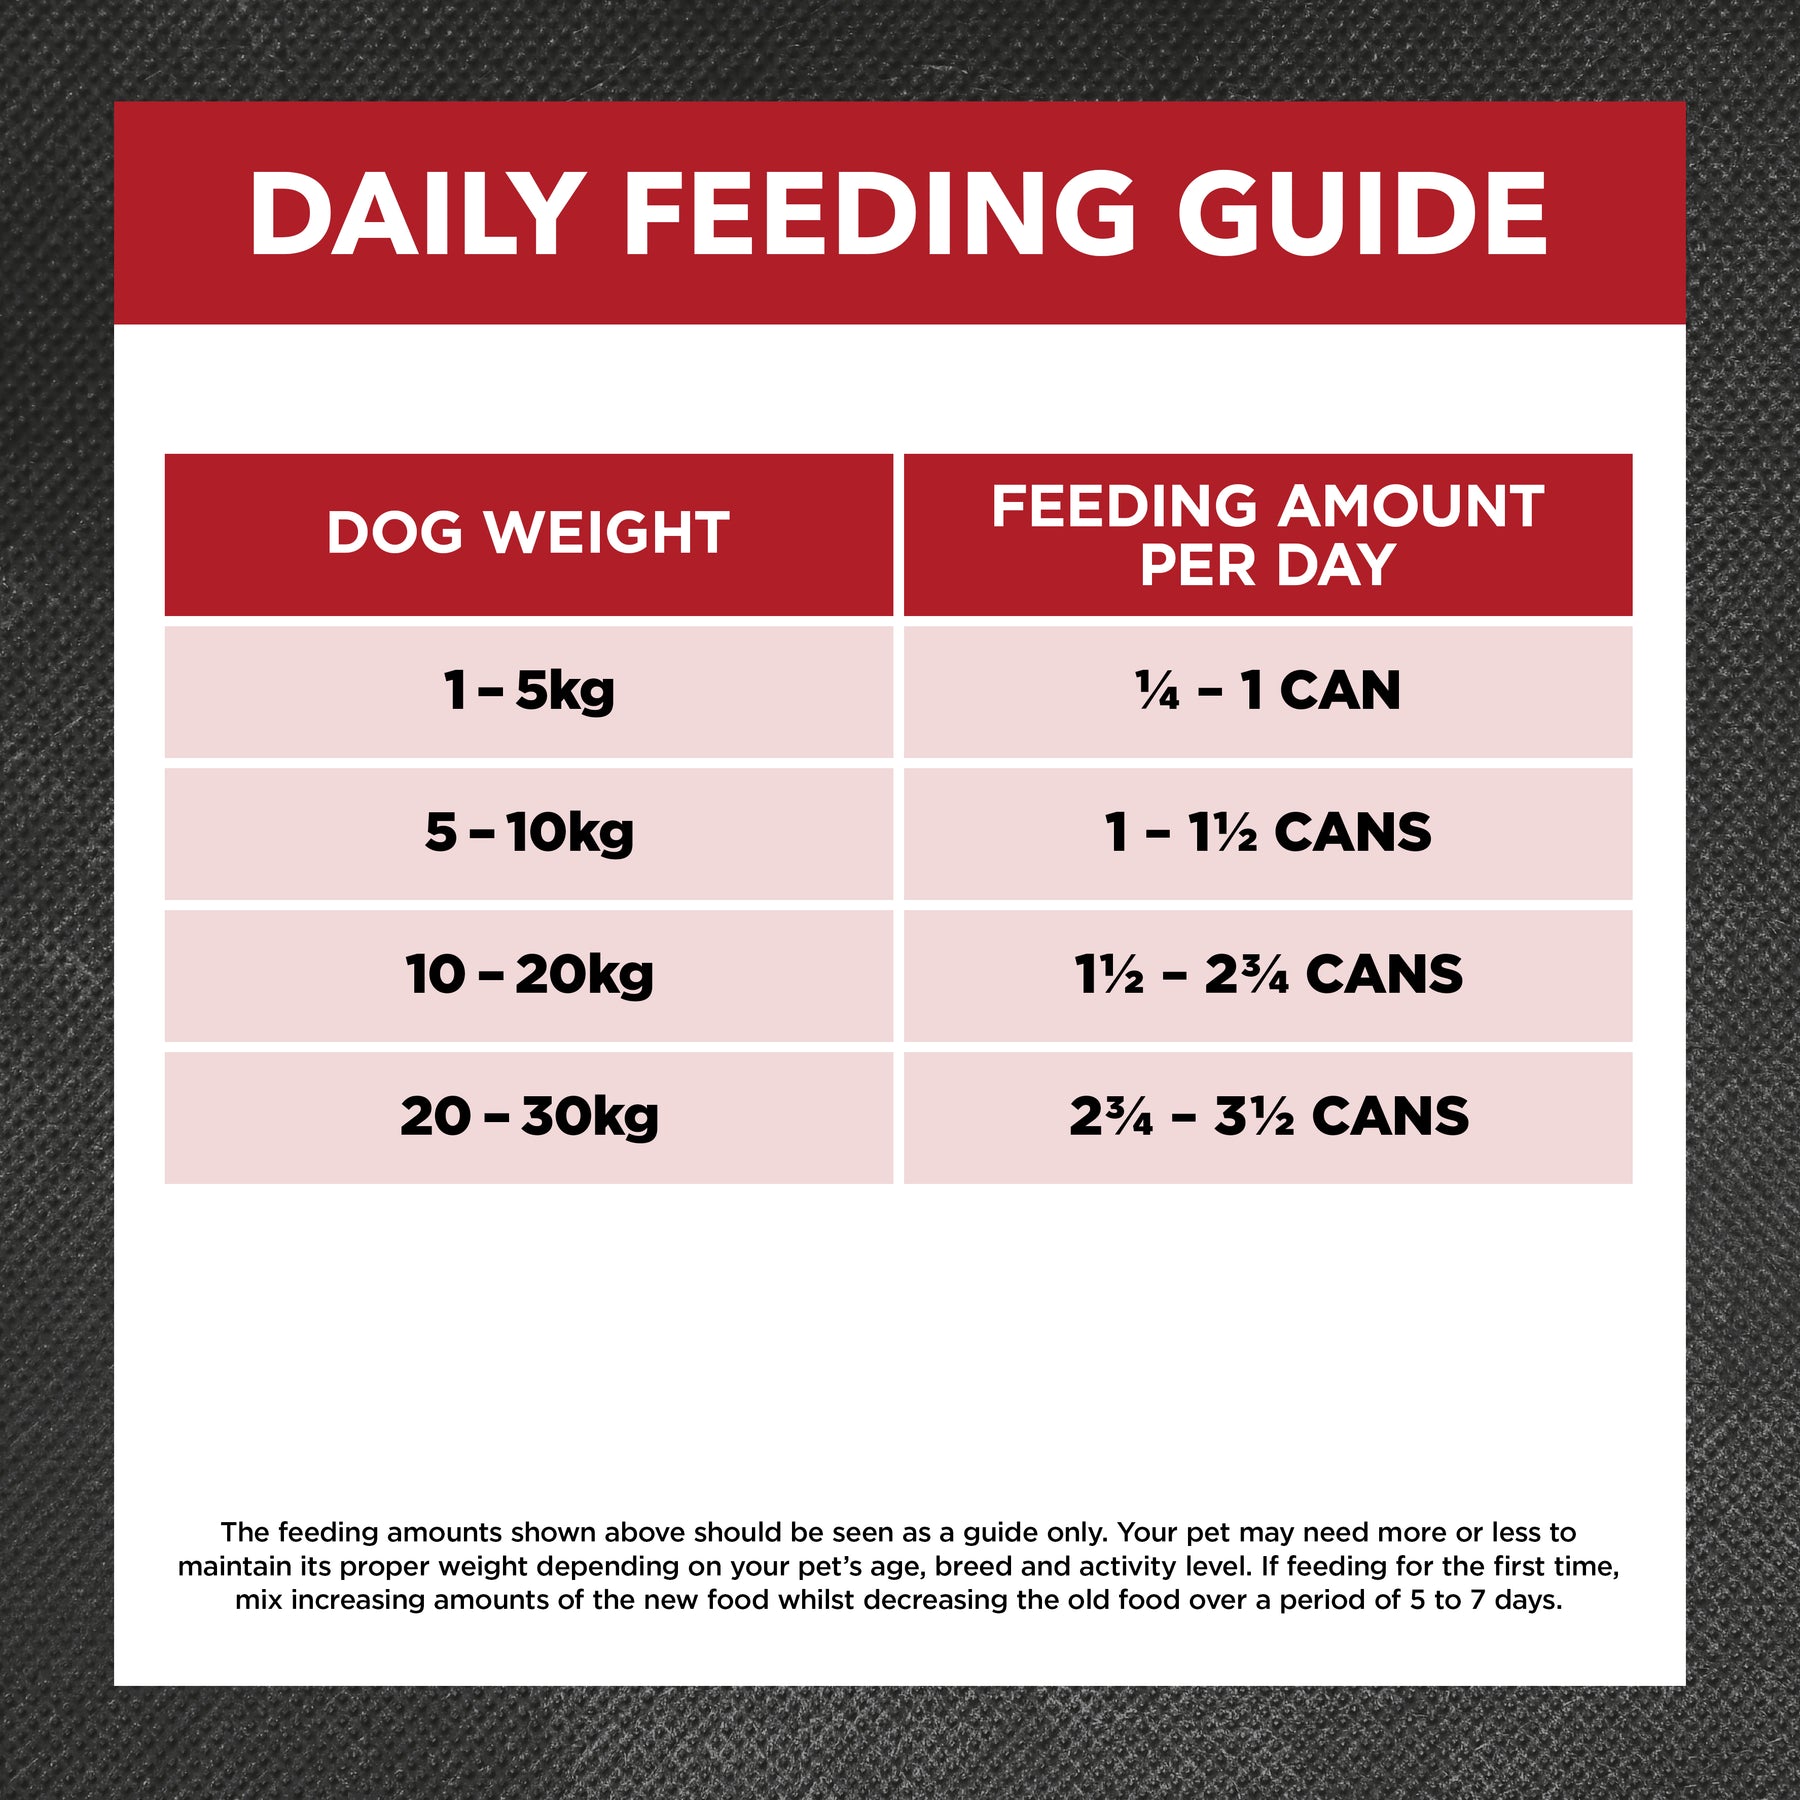 Holistic Nutrition Adult Wet Dog Food Beef & Brown Rice Loaf 400g